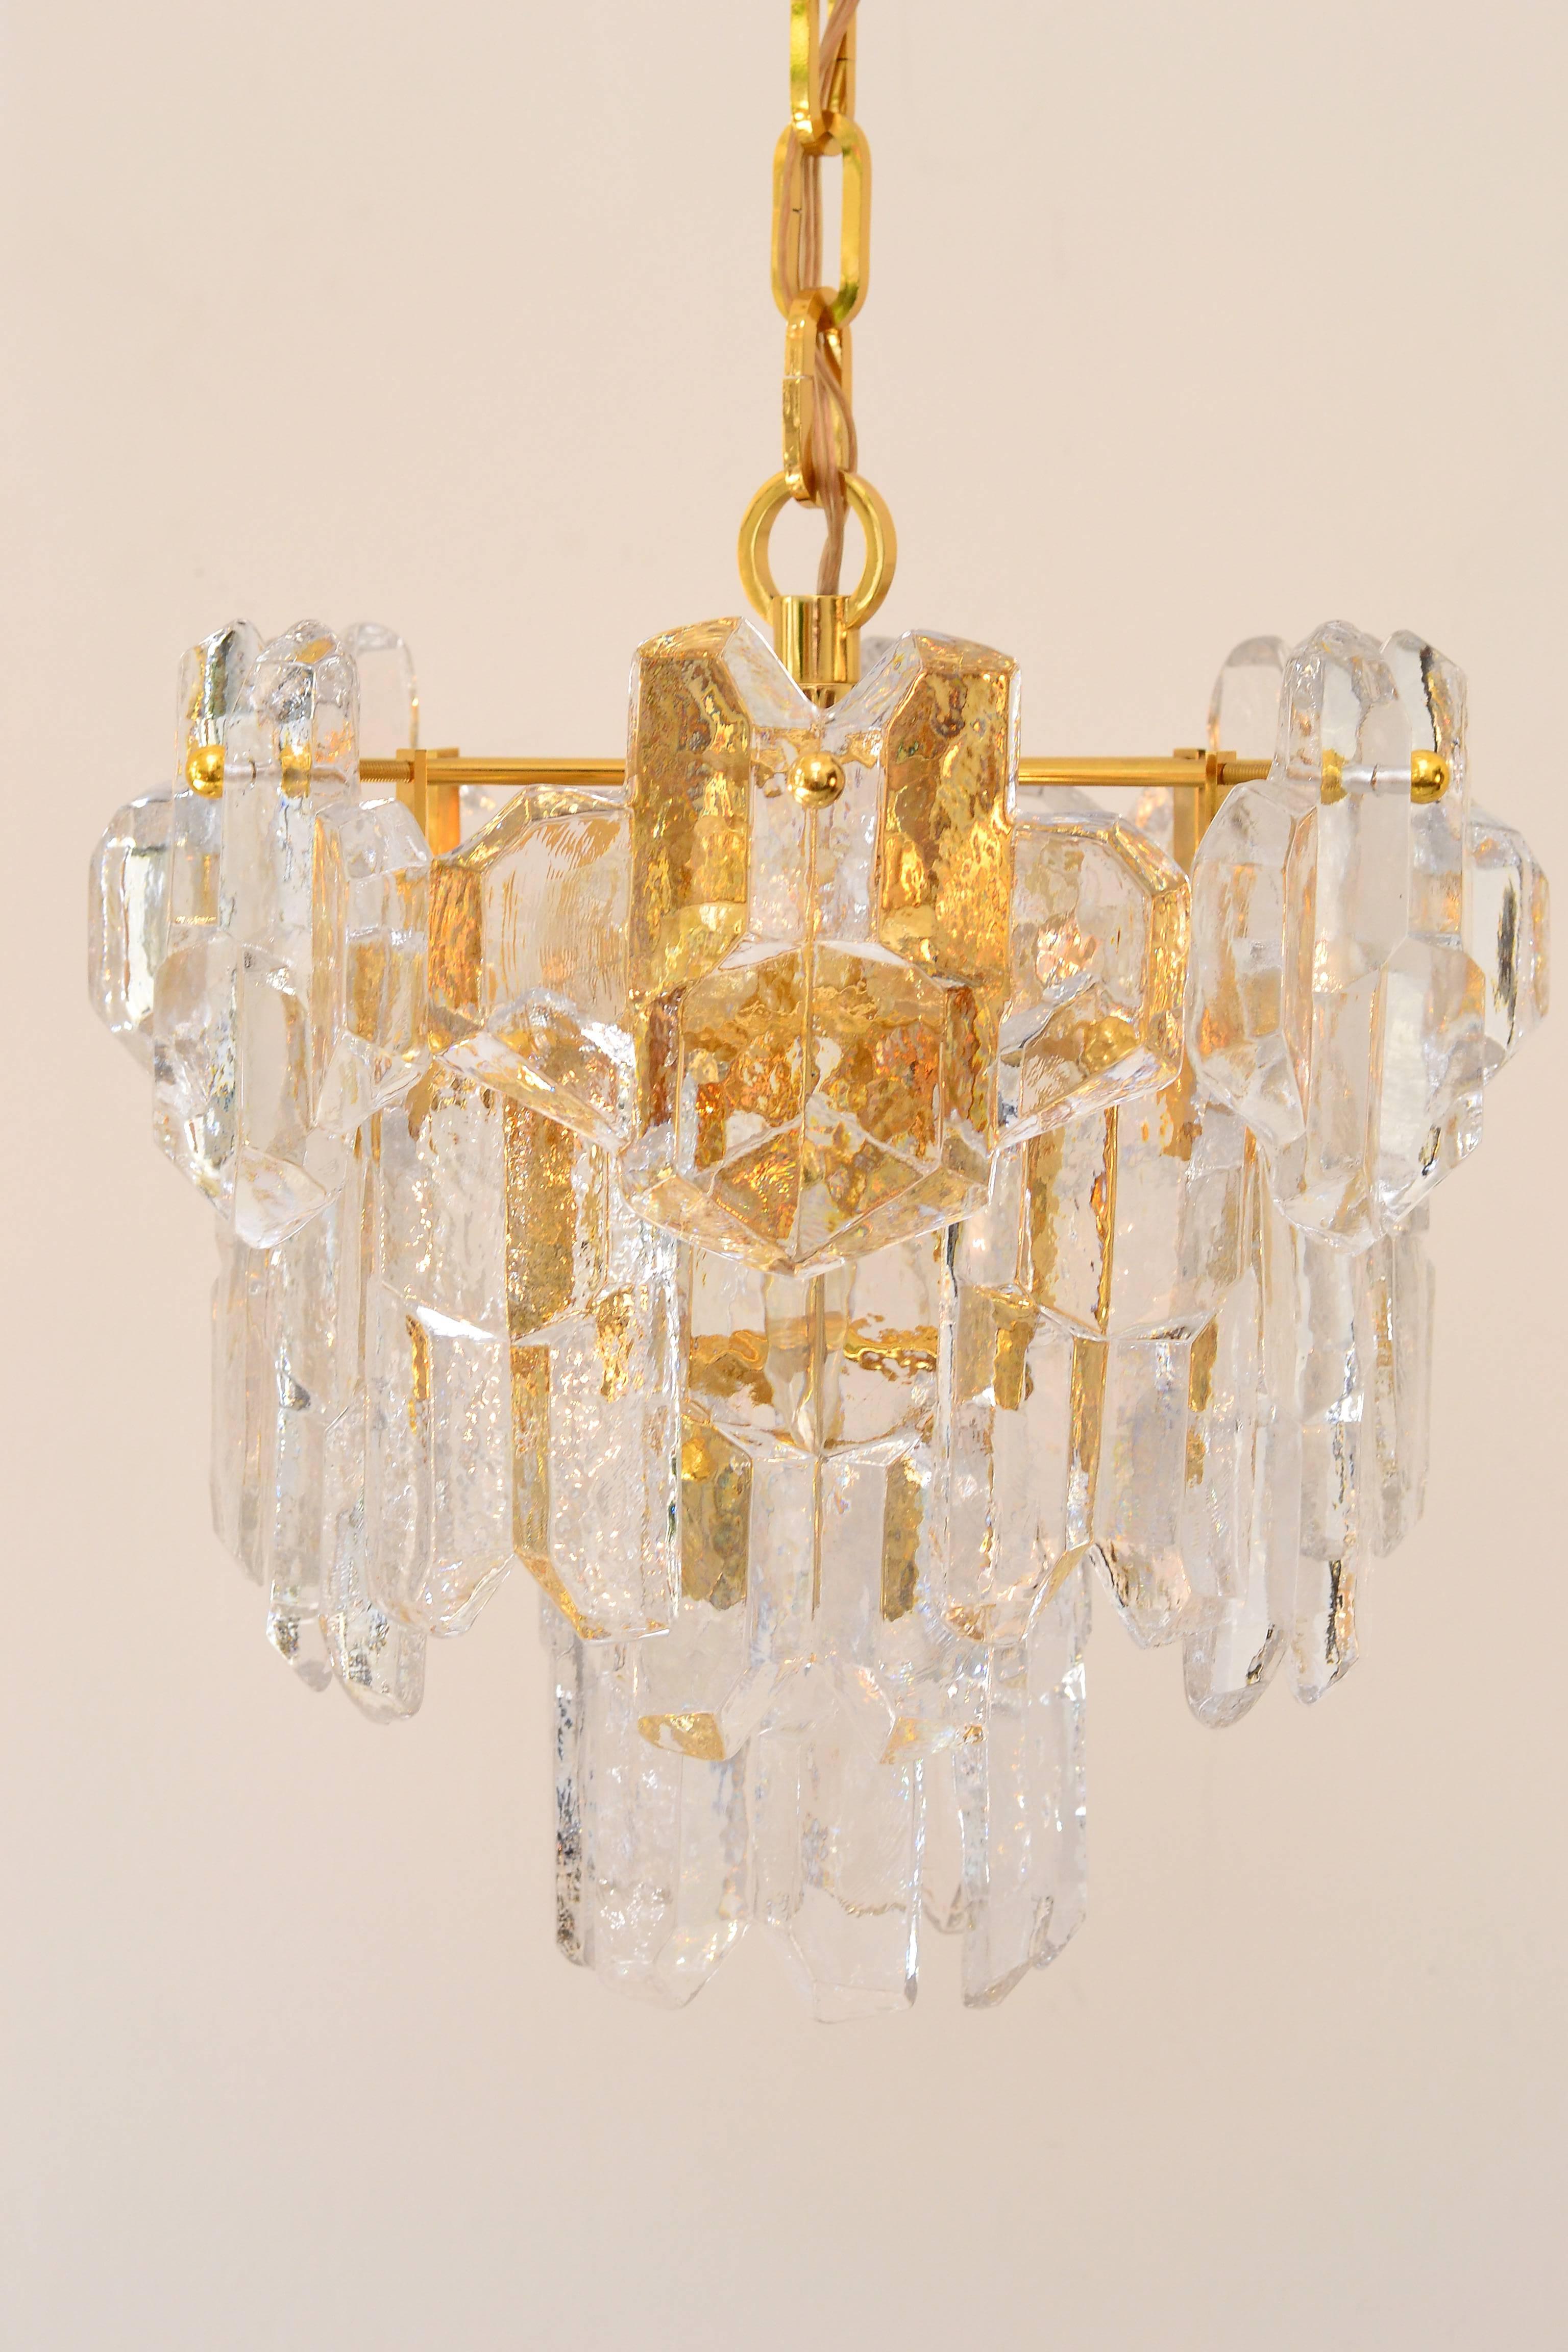 J. T. Kalmar thick textured clear glass chandelier (gilded).
Original condition.
Seven bulbs.